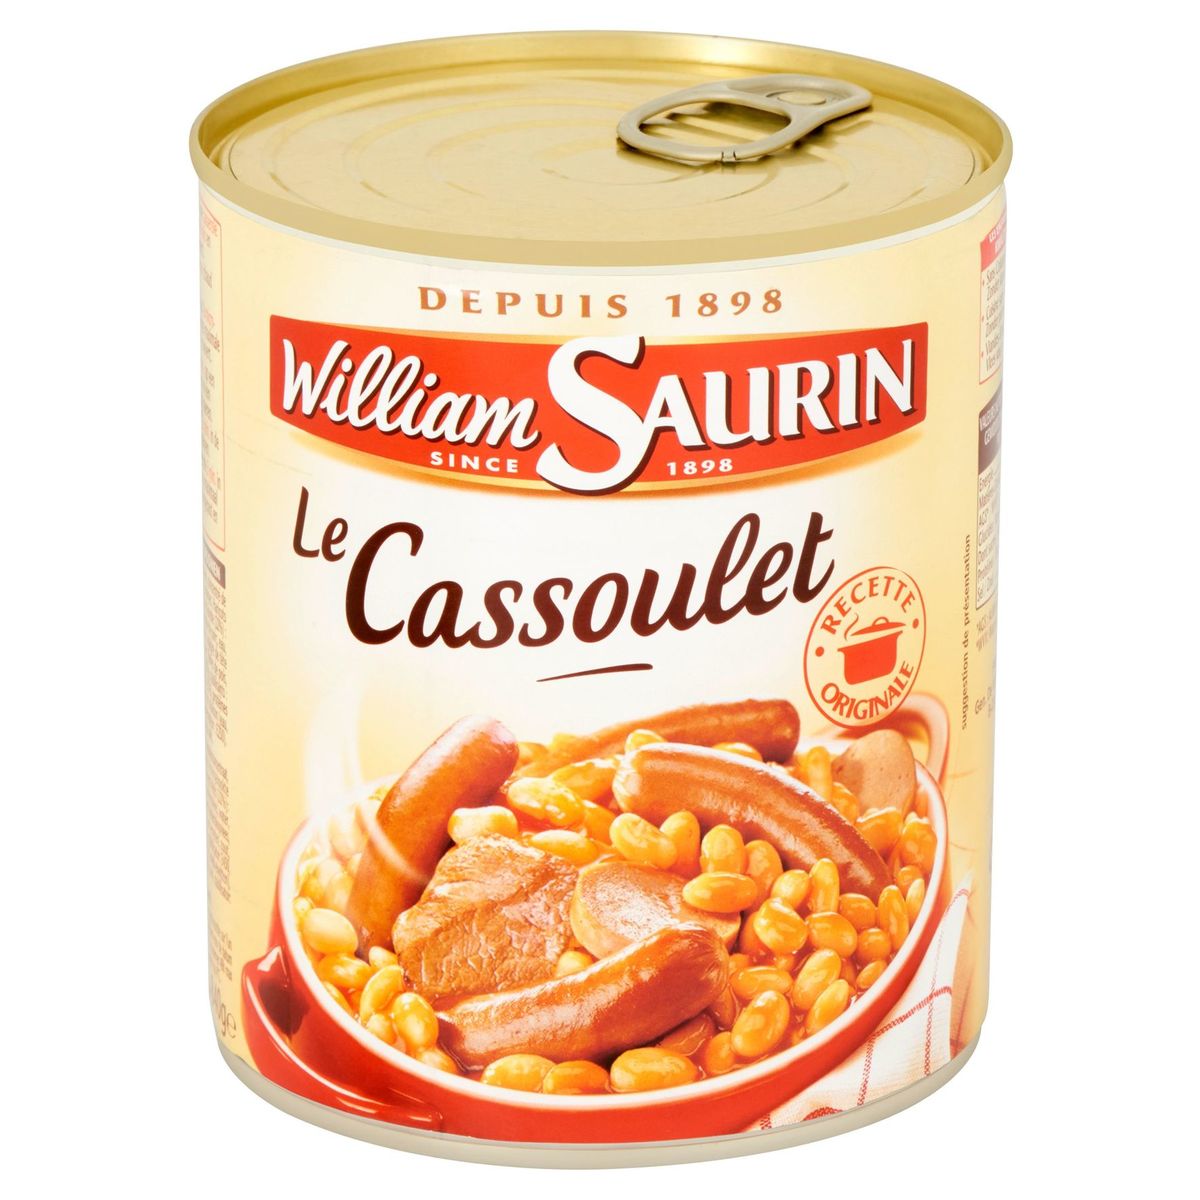 William Saurin le Cassoulet 840 g